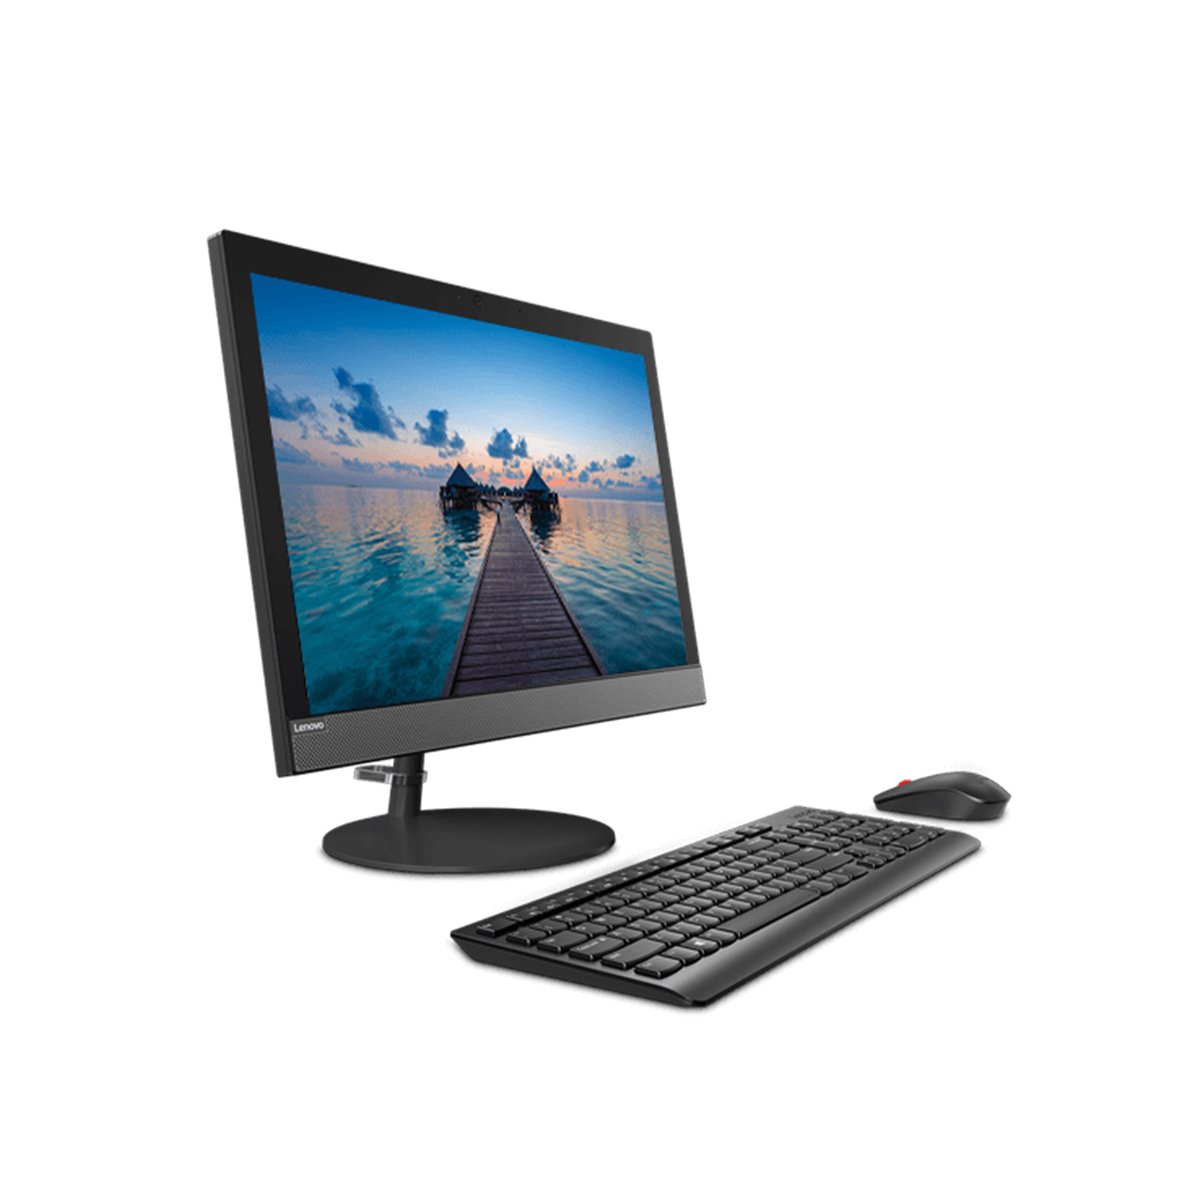 Lenovo All In One Desktop V130-10RX0036EX Intel Celeron. Black (With out windows)